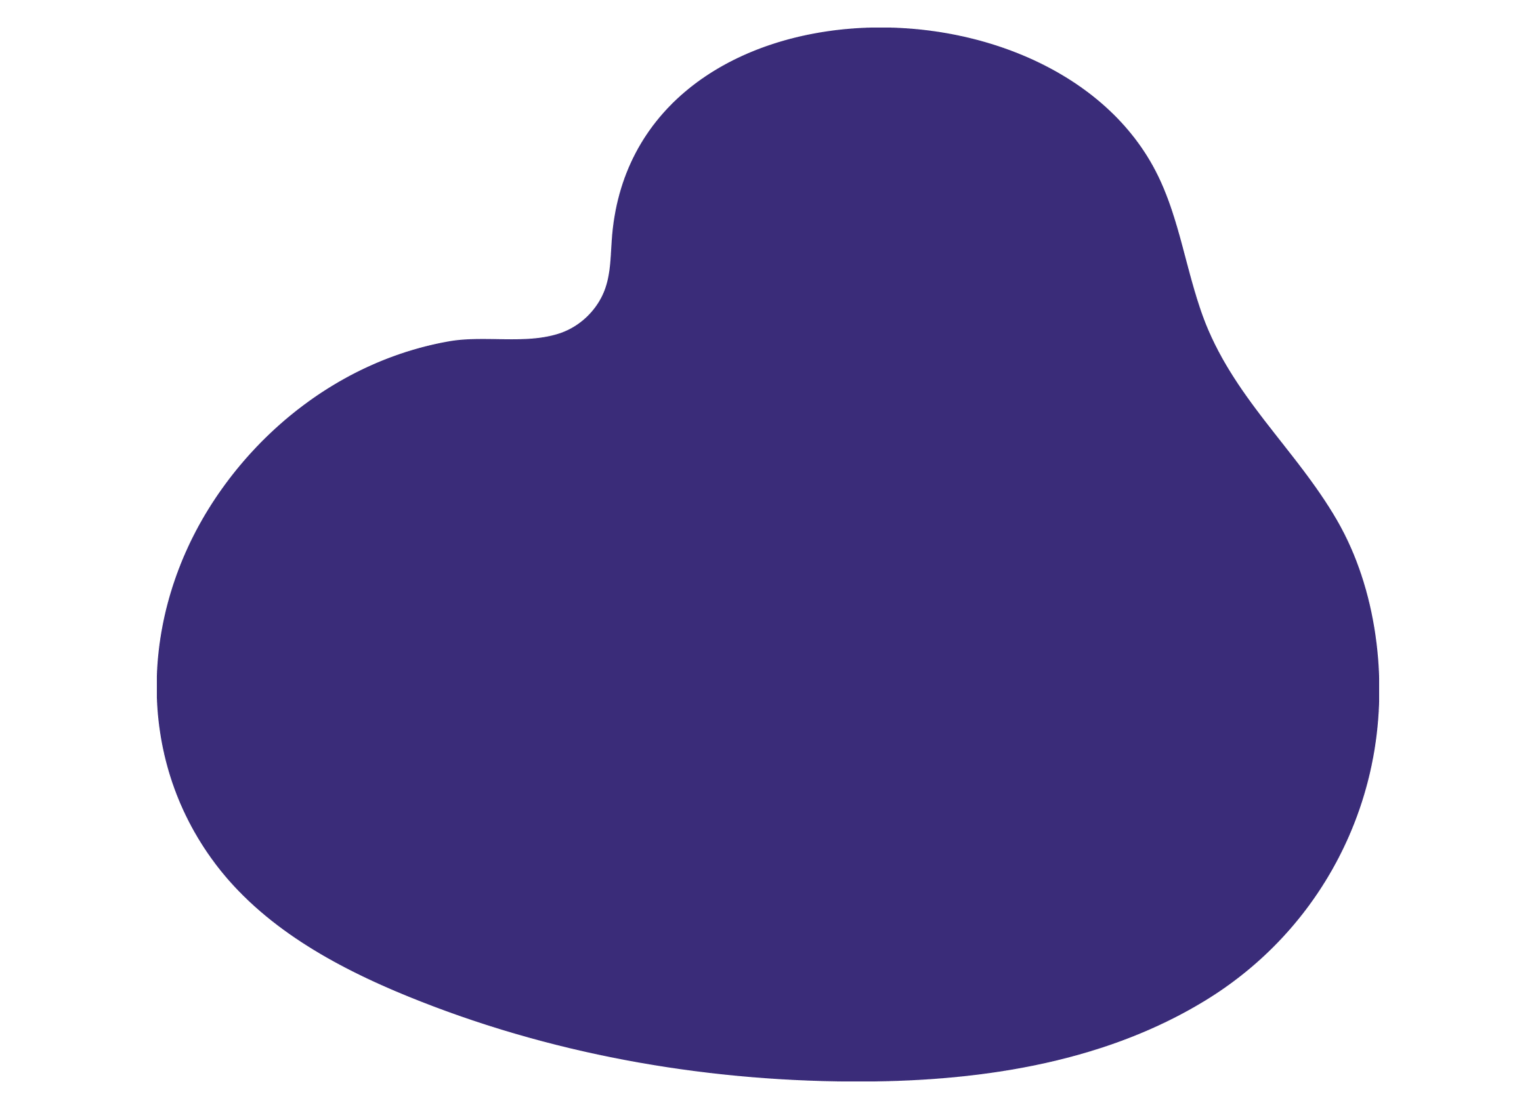 A purple Cloud